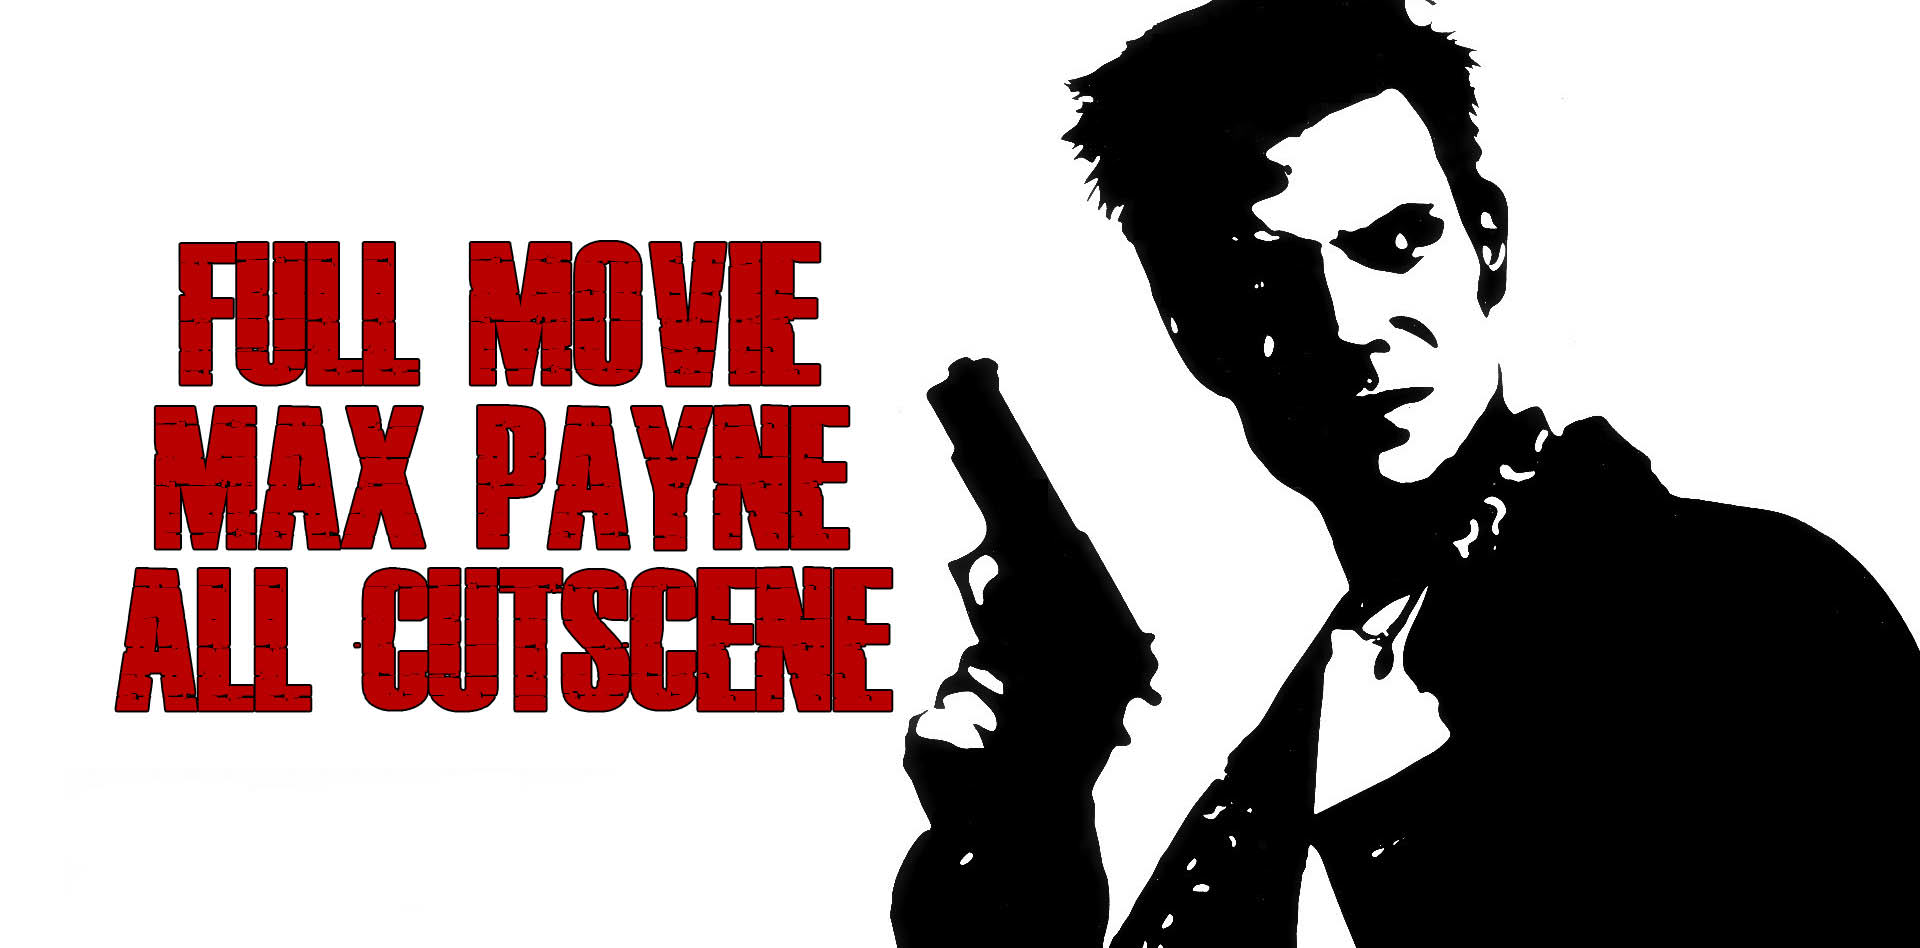 Max Payne Full Movie All Cutscenes 2